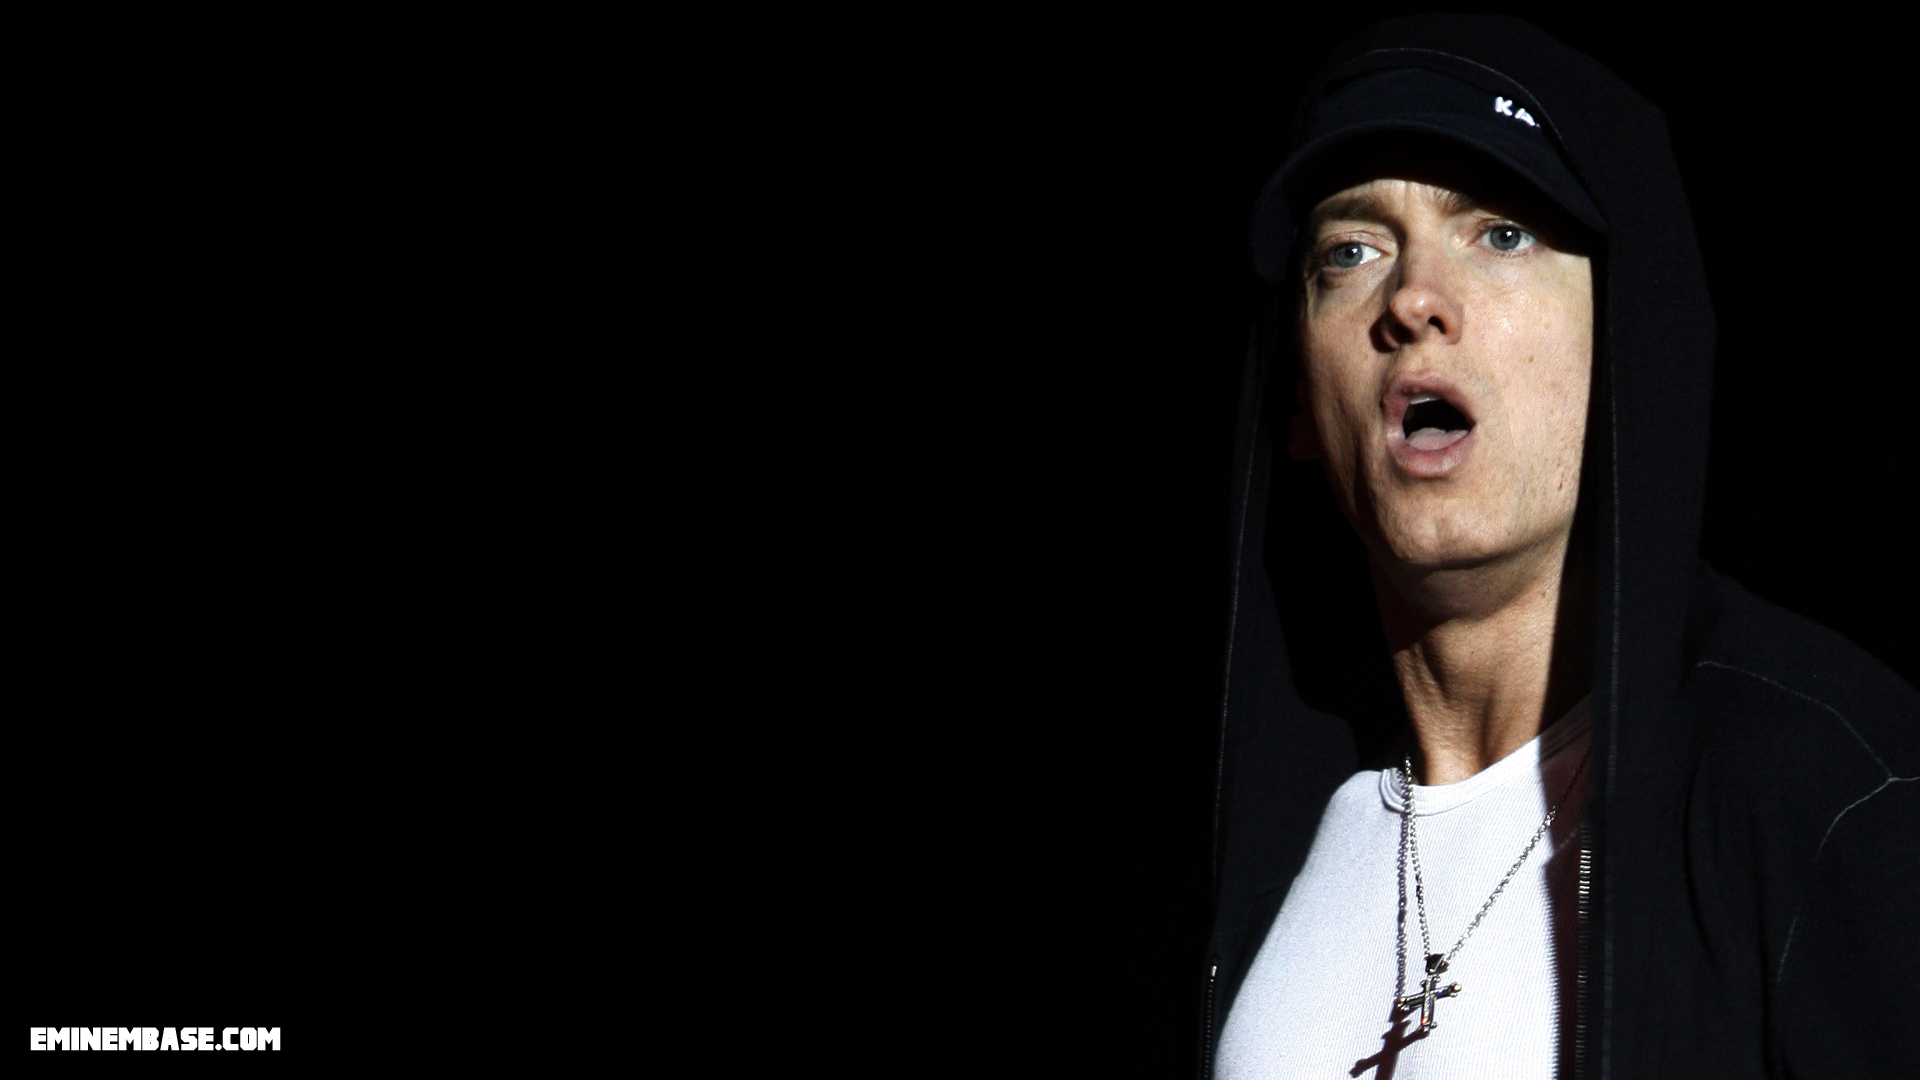 Eminem Wallpaper And Background Image